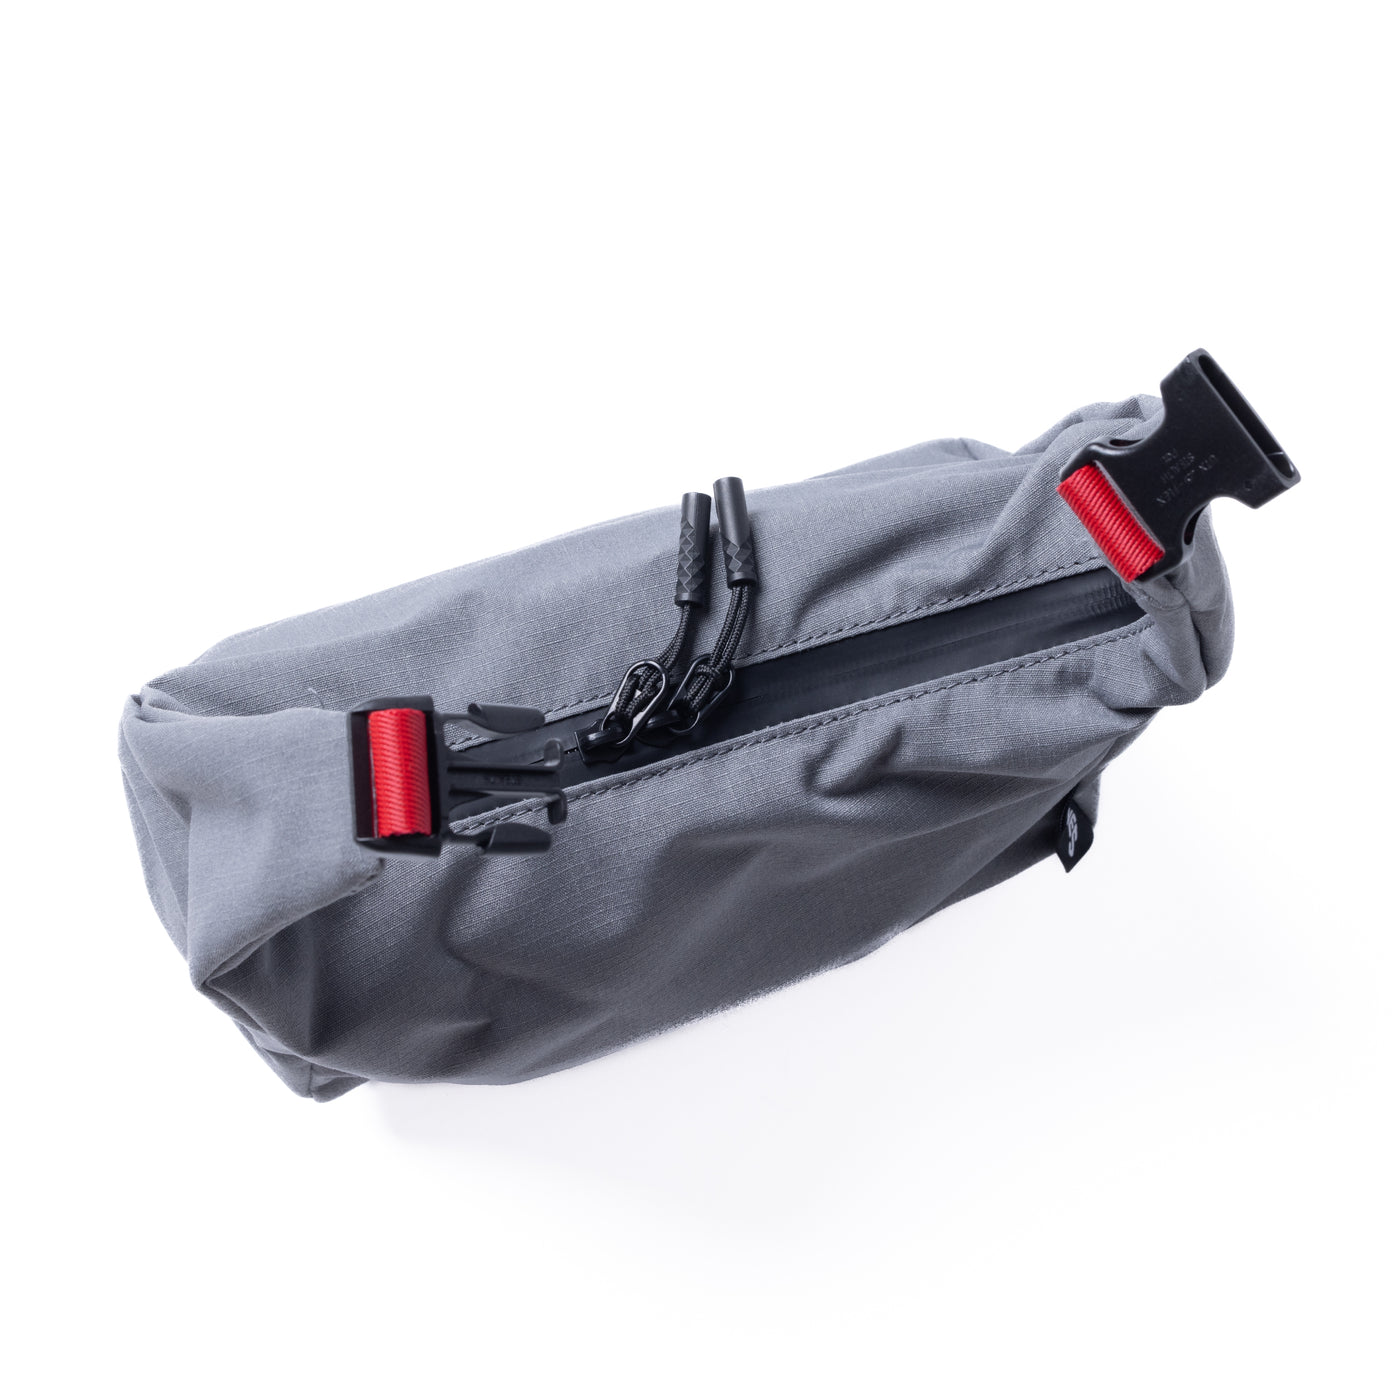 Goodie Bag R - Charcoal